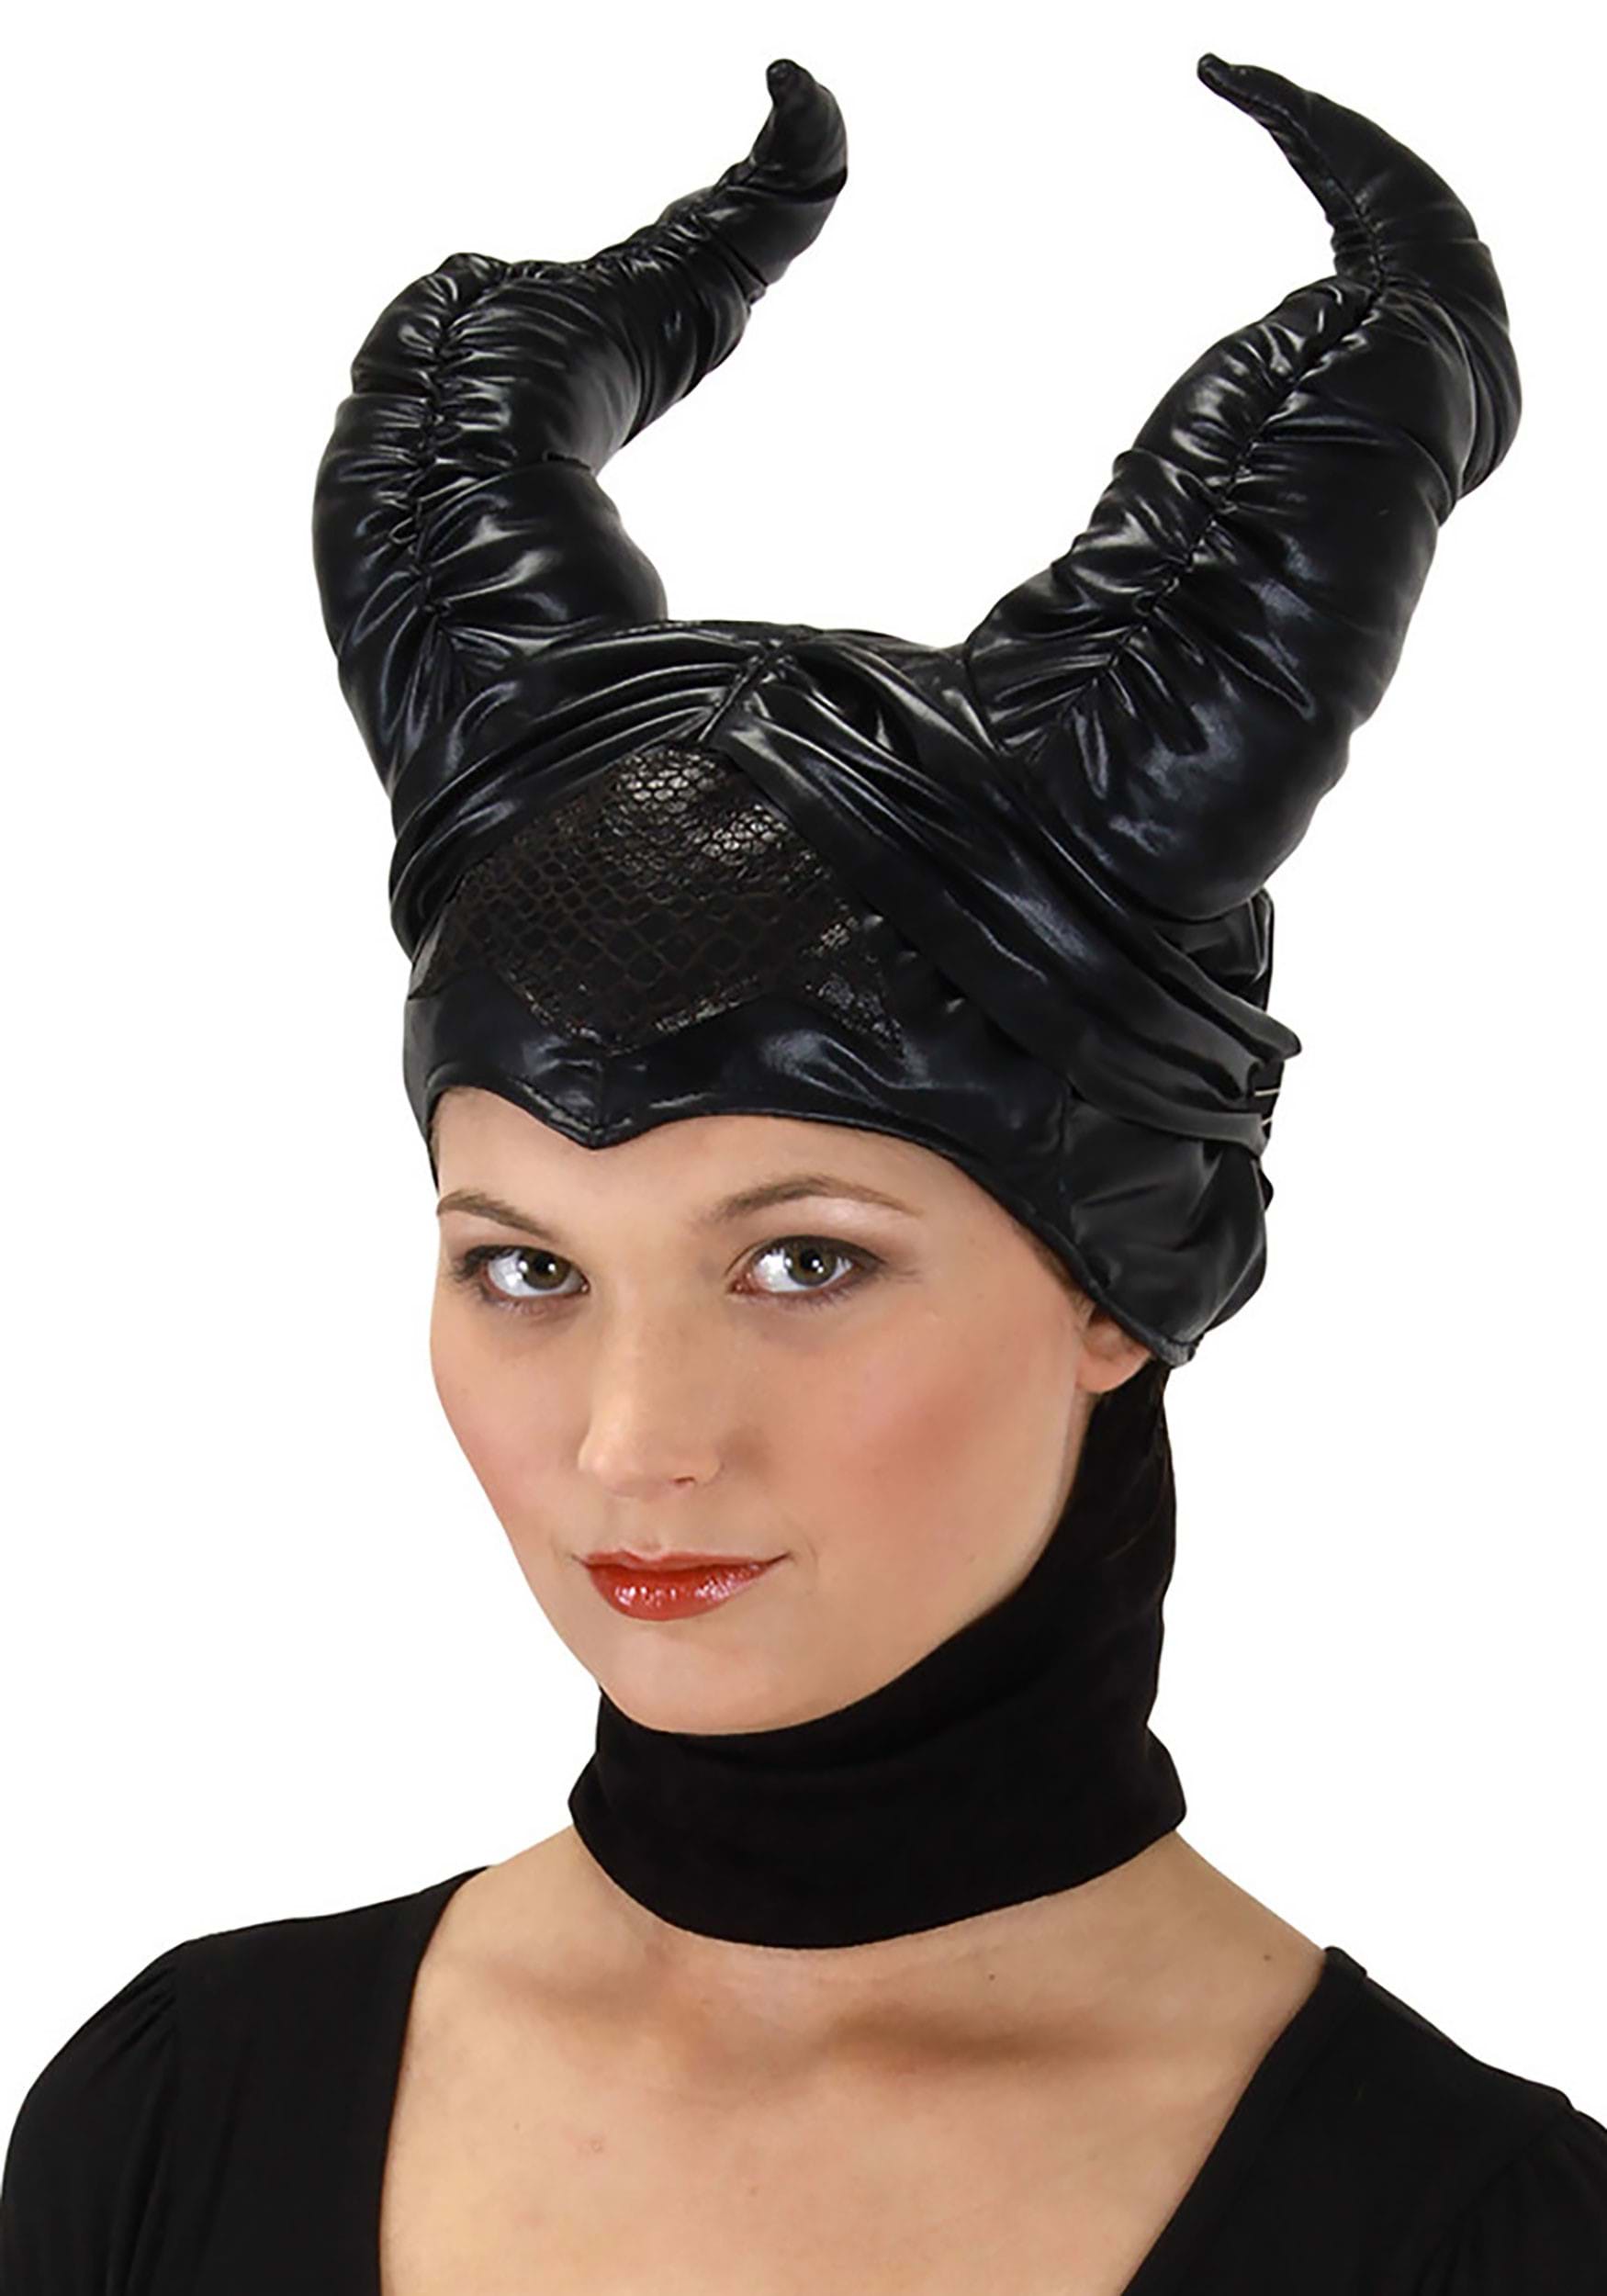 Adult Maleficent Stuffed Headpiece